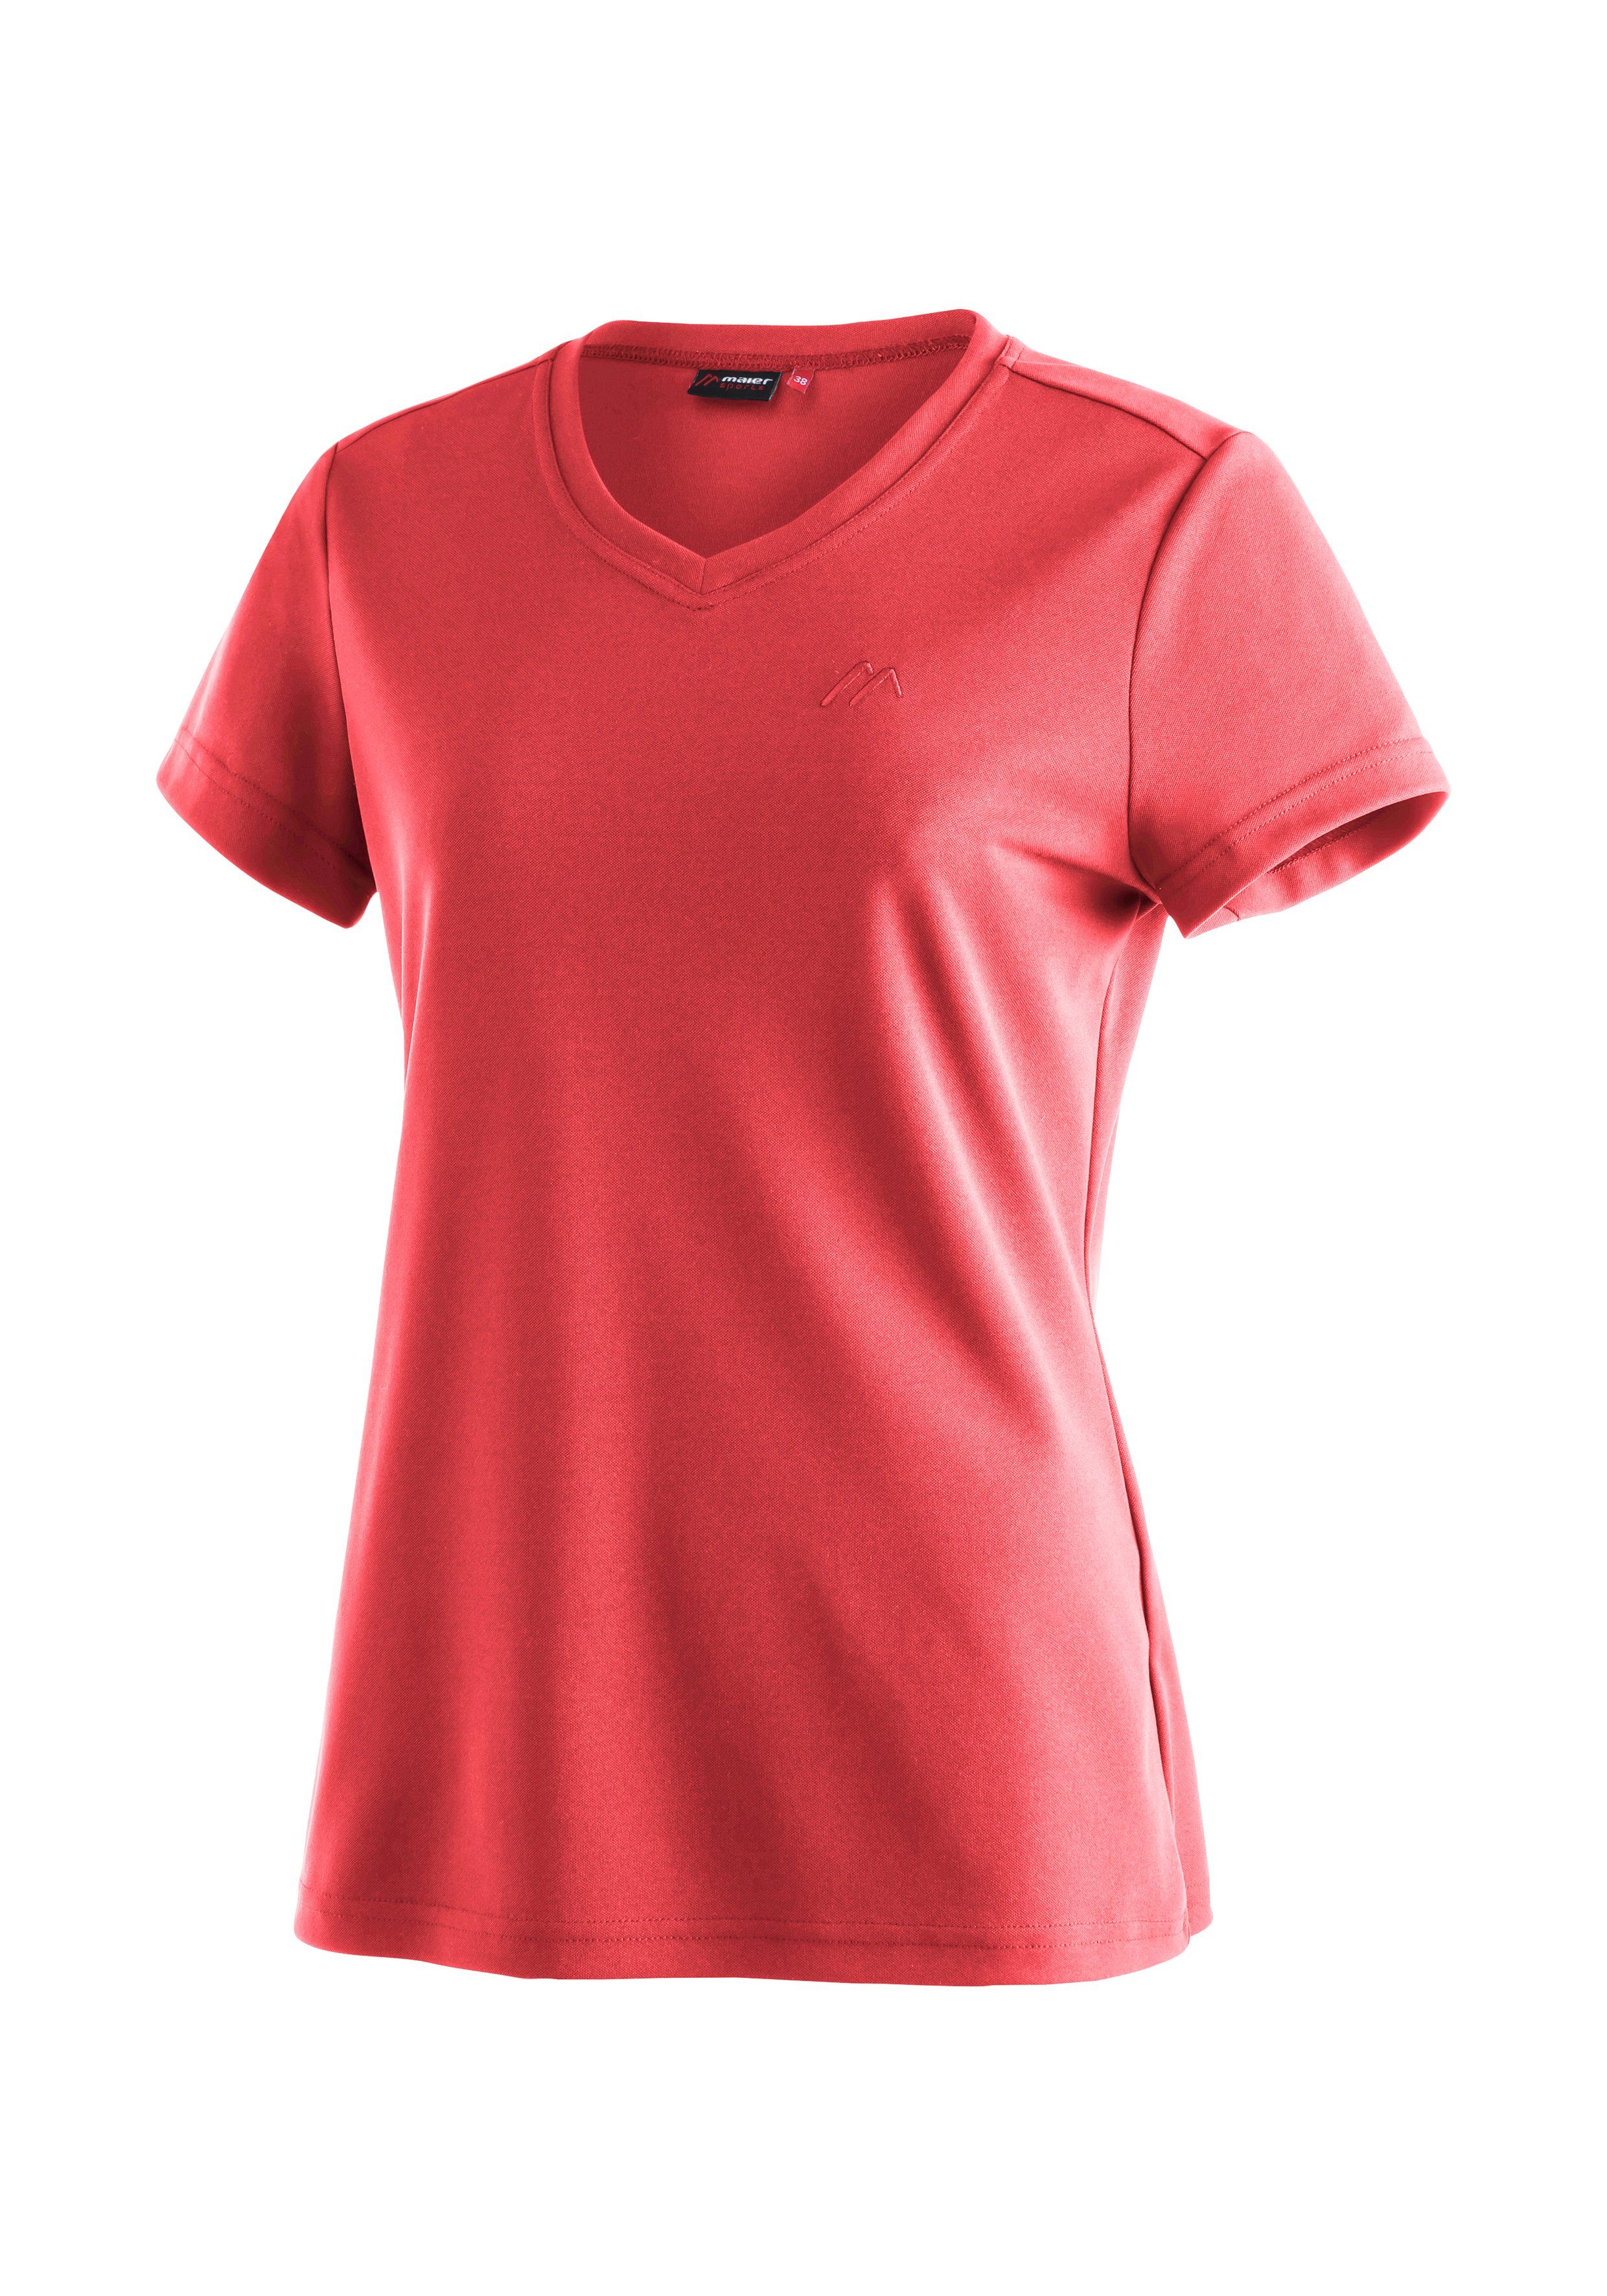 und Maier Kurzarmshirt Trudy für Funktionsshirt Damen hellrot Wandern Sports T-Shirt, Freizeit